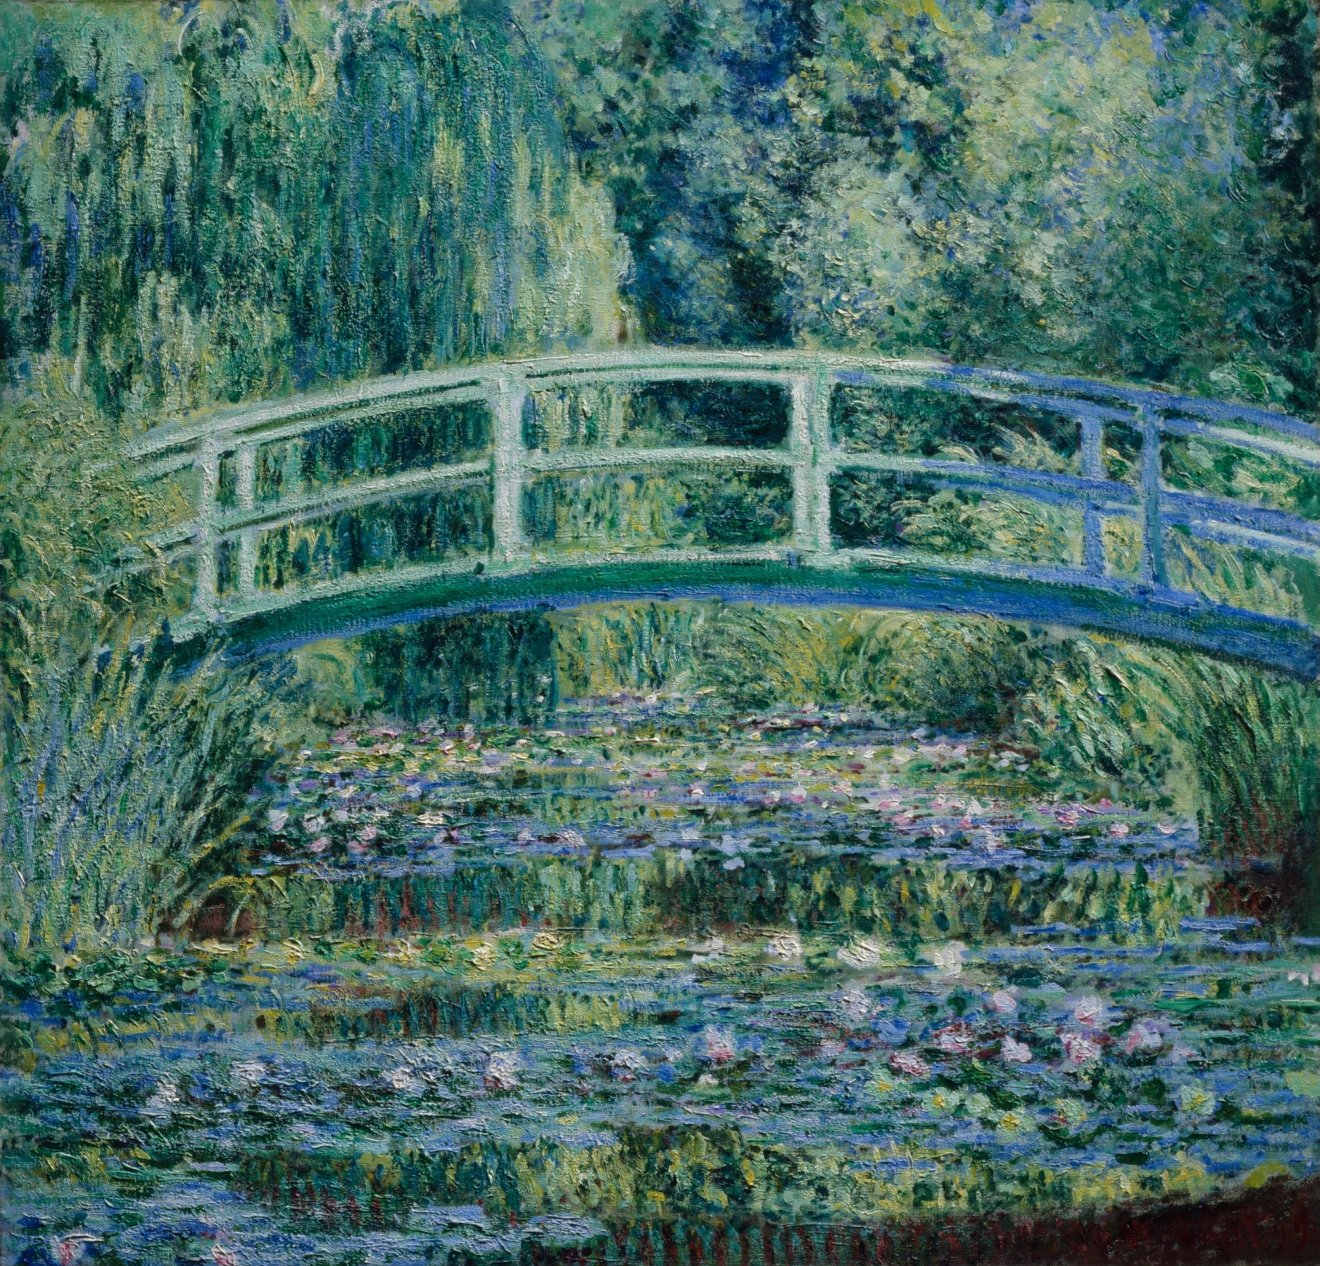 Claude+Monet-1840-1926 (398).jpg